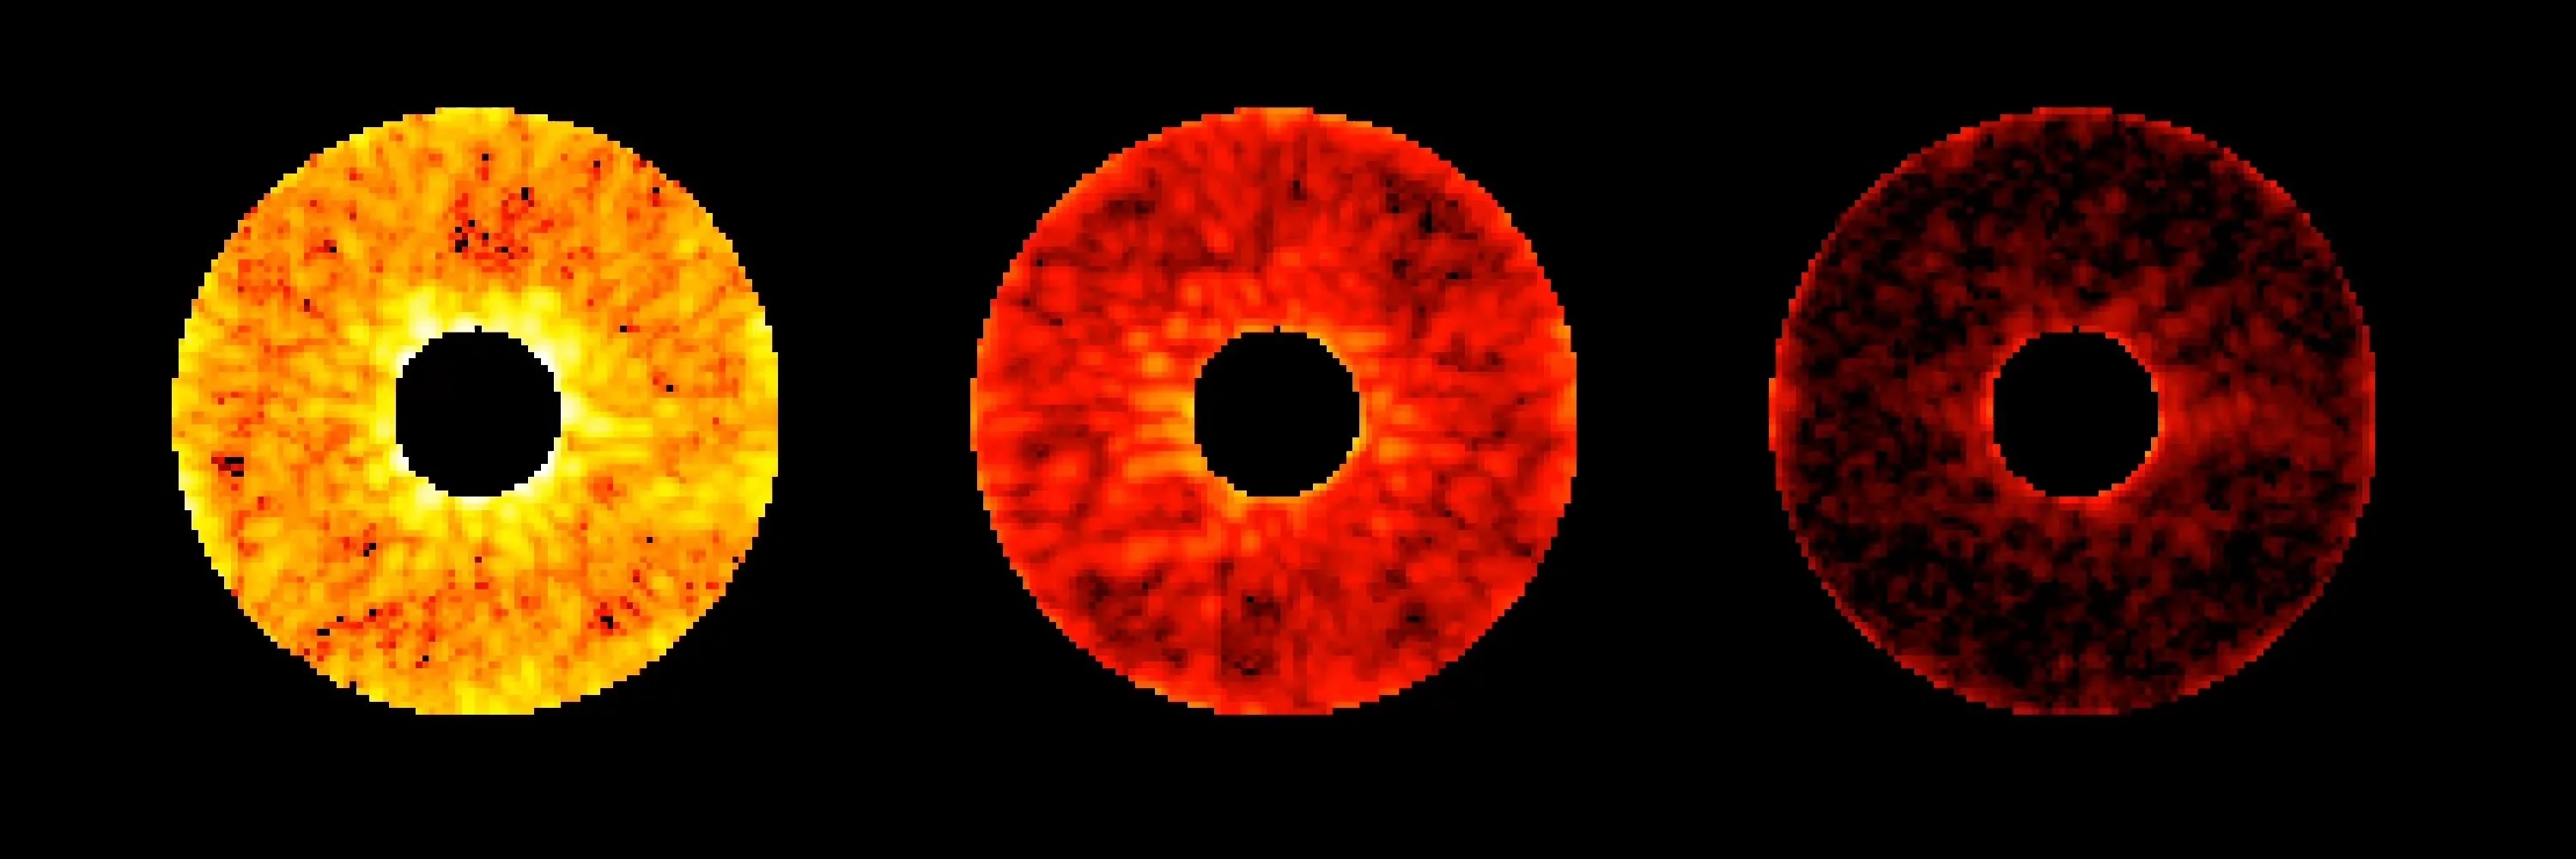 e2-dark-hole-data-illustration